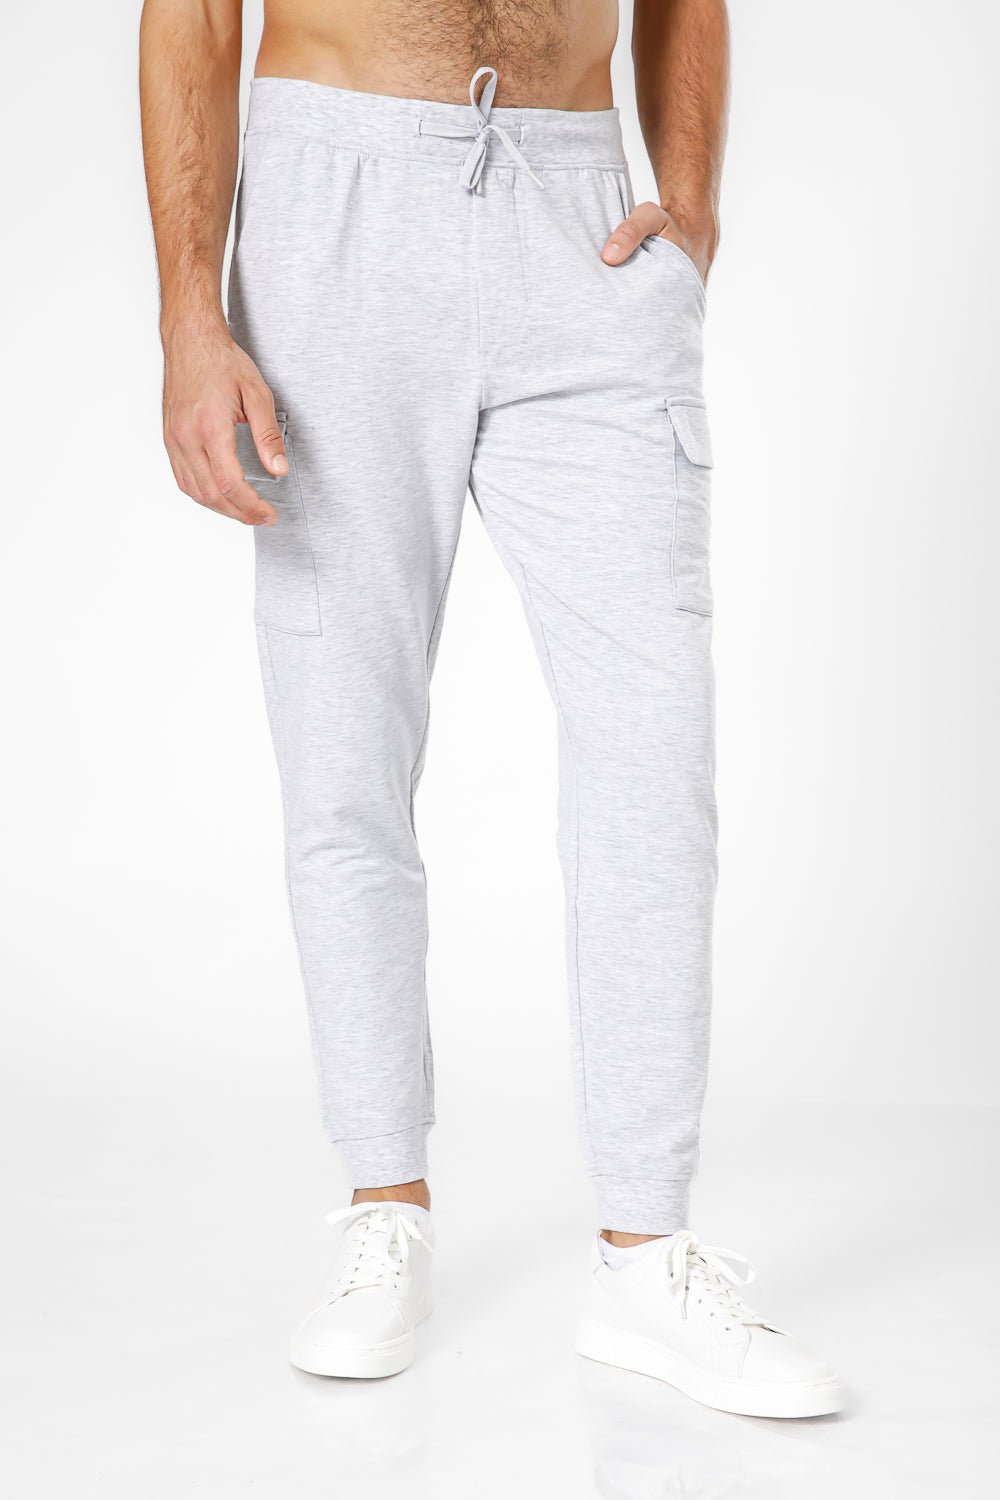 DELTA - מכנסי ג’וגר ארוכים דקים עם כיסי דגמ”ח בצבע אפור - MASHBIR//365